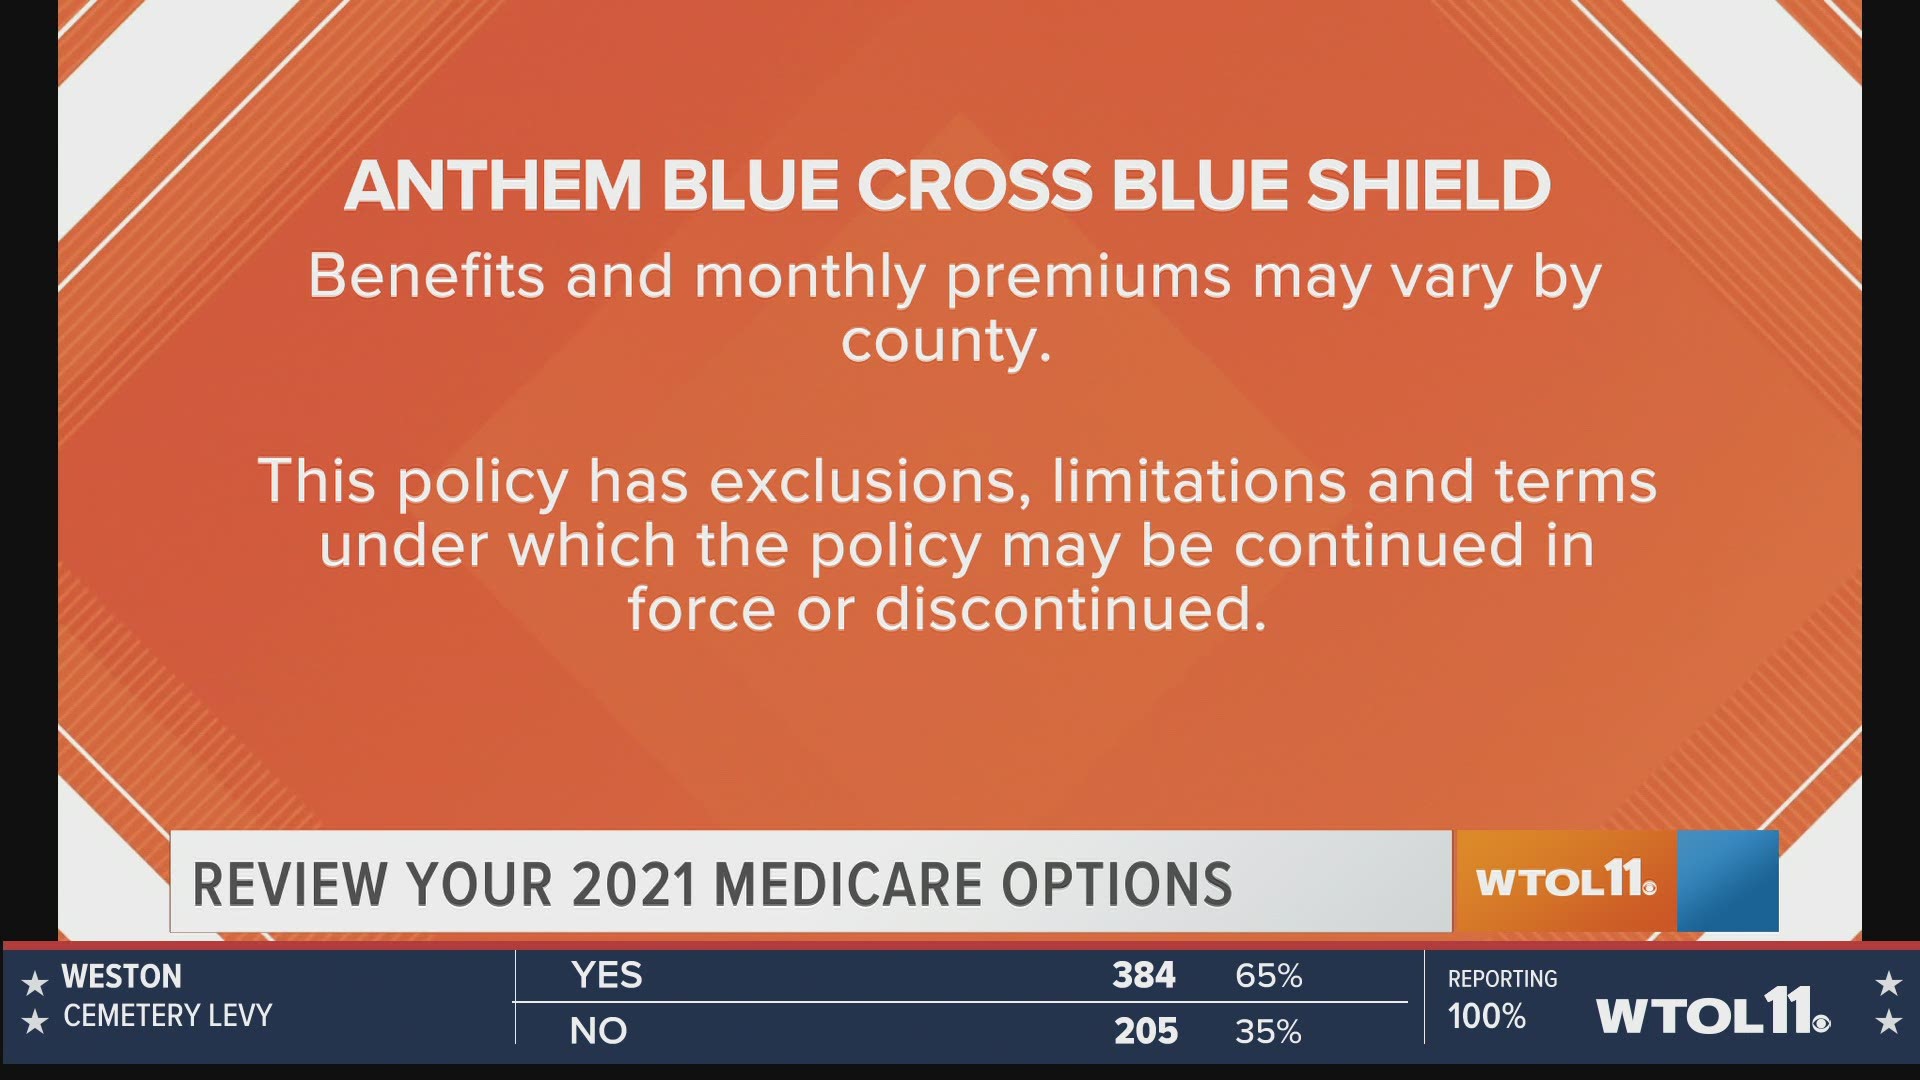 Anthem Blue Cross Blue Shield explains the basics of Medicare